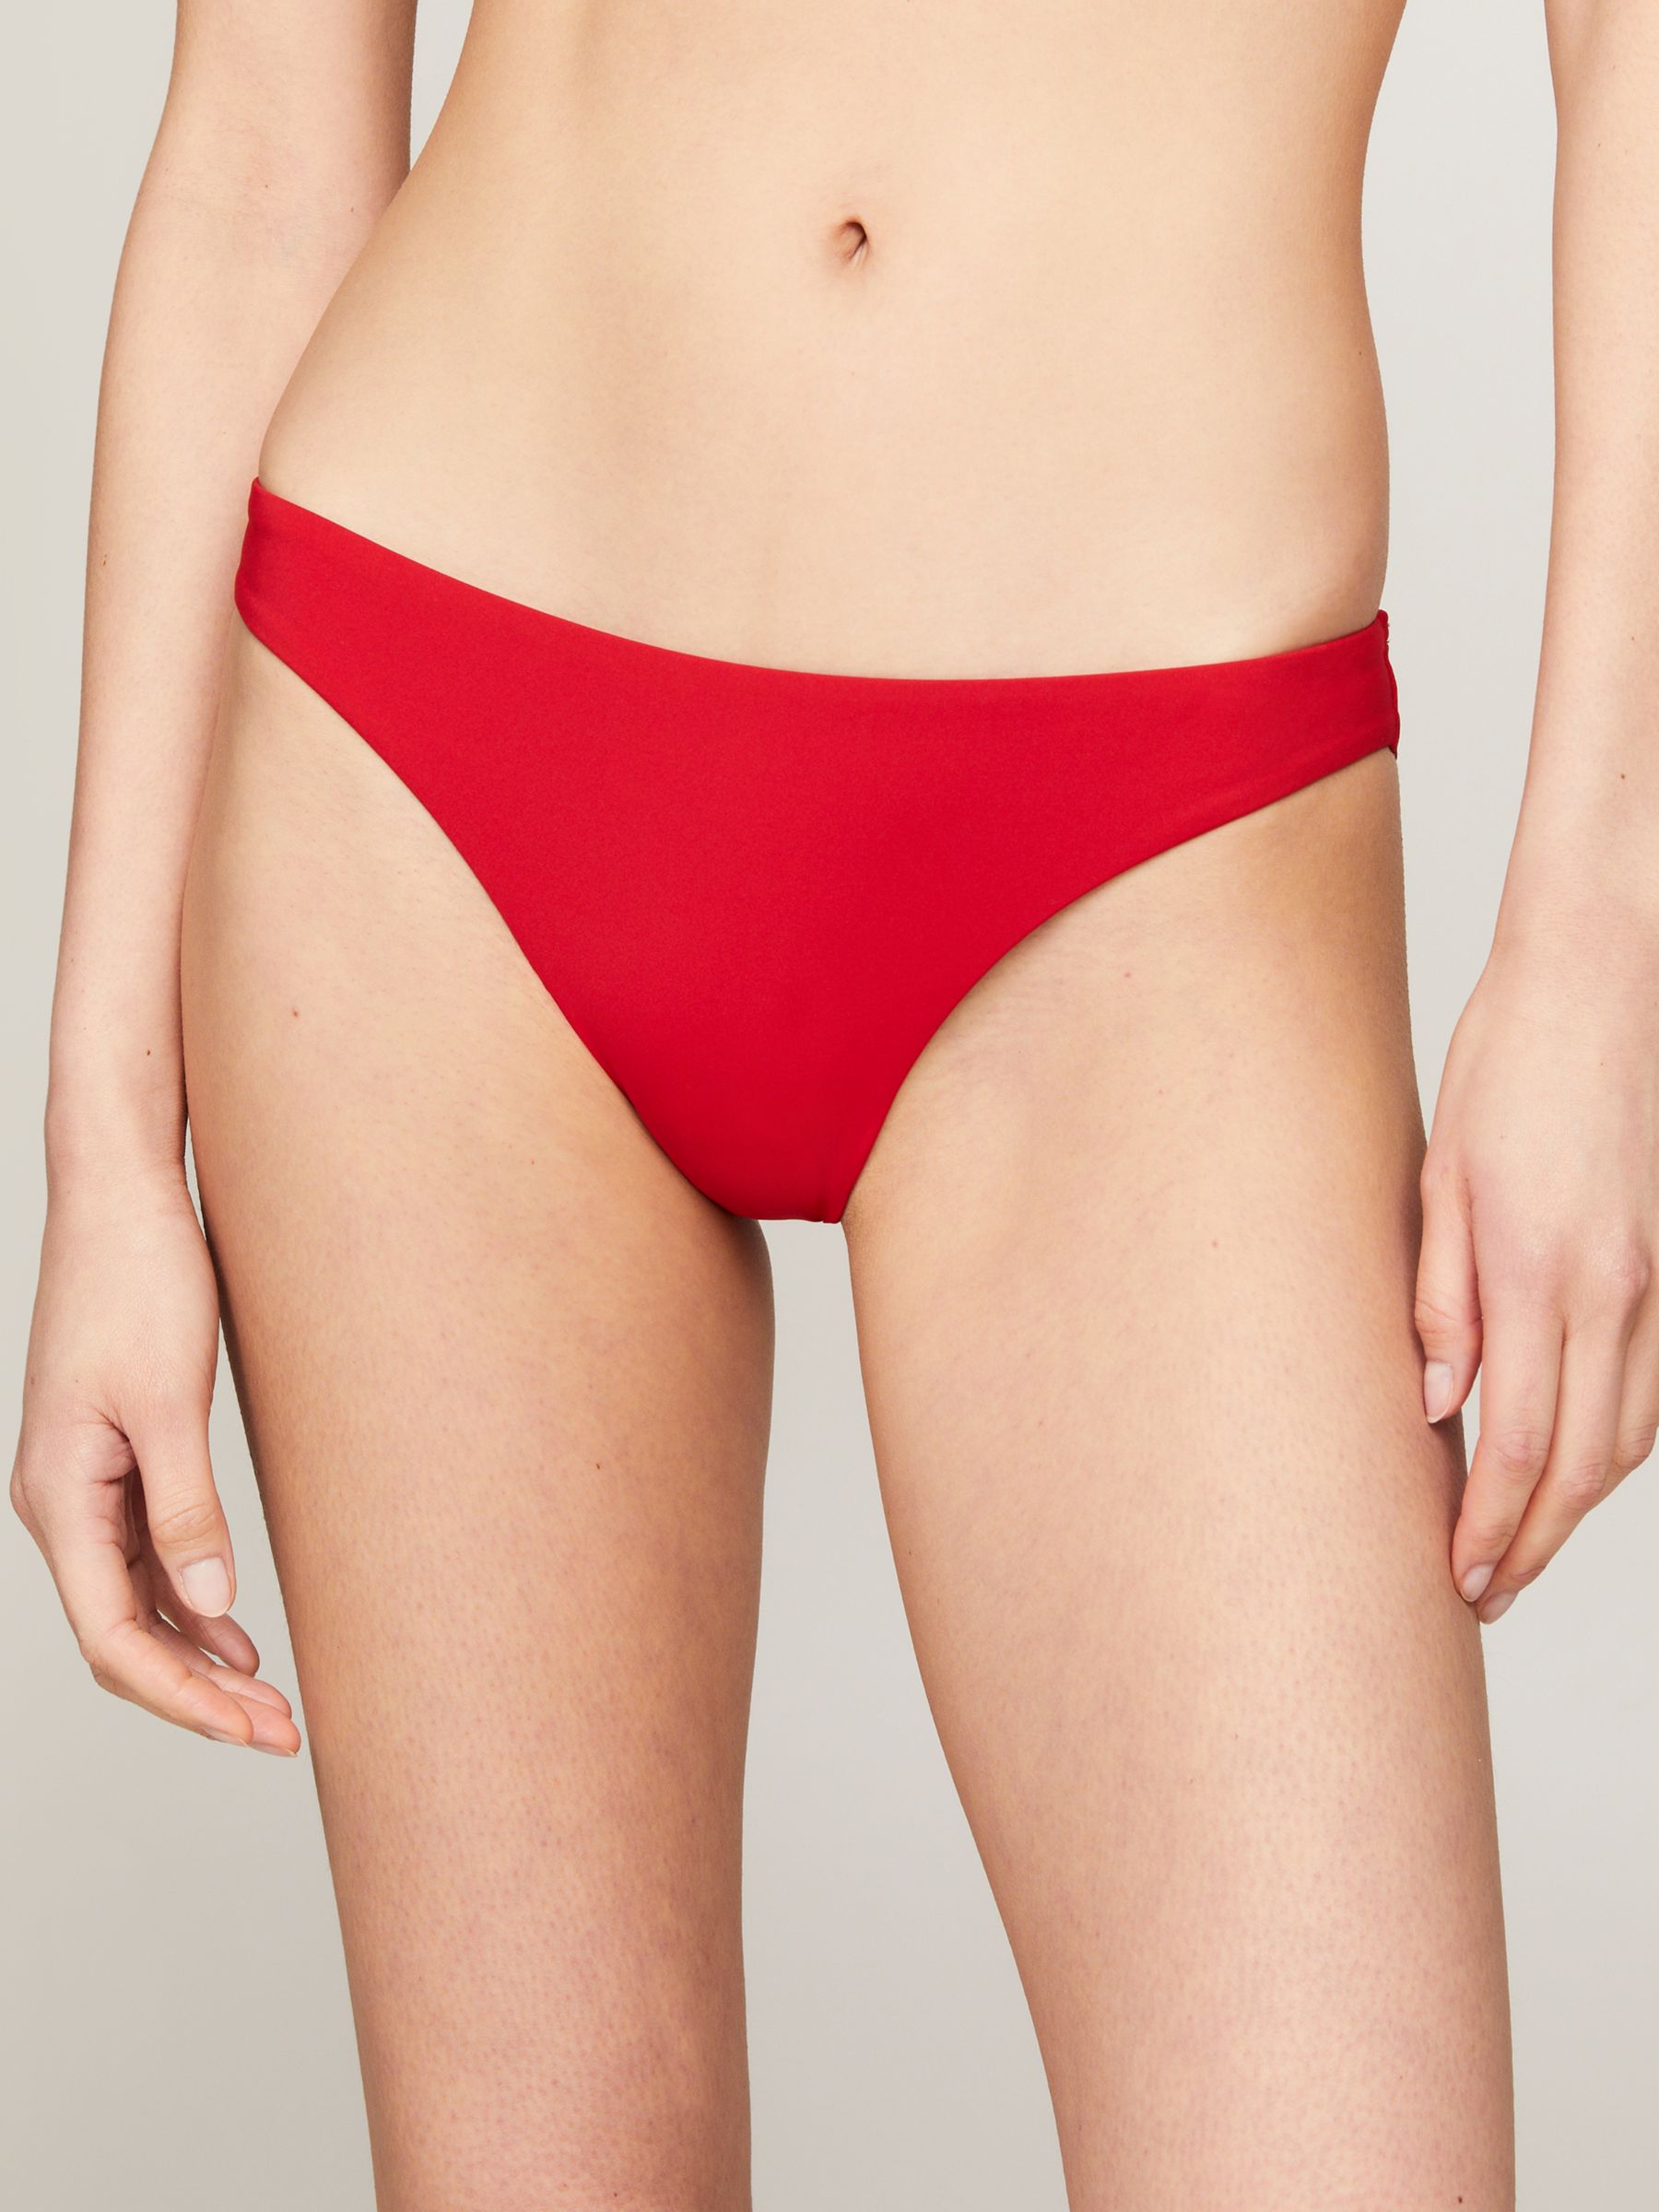 Tommy Hilfiger Brazilian Bikini Bottoms, Primary Red, L